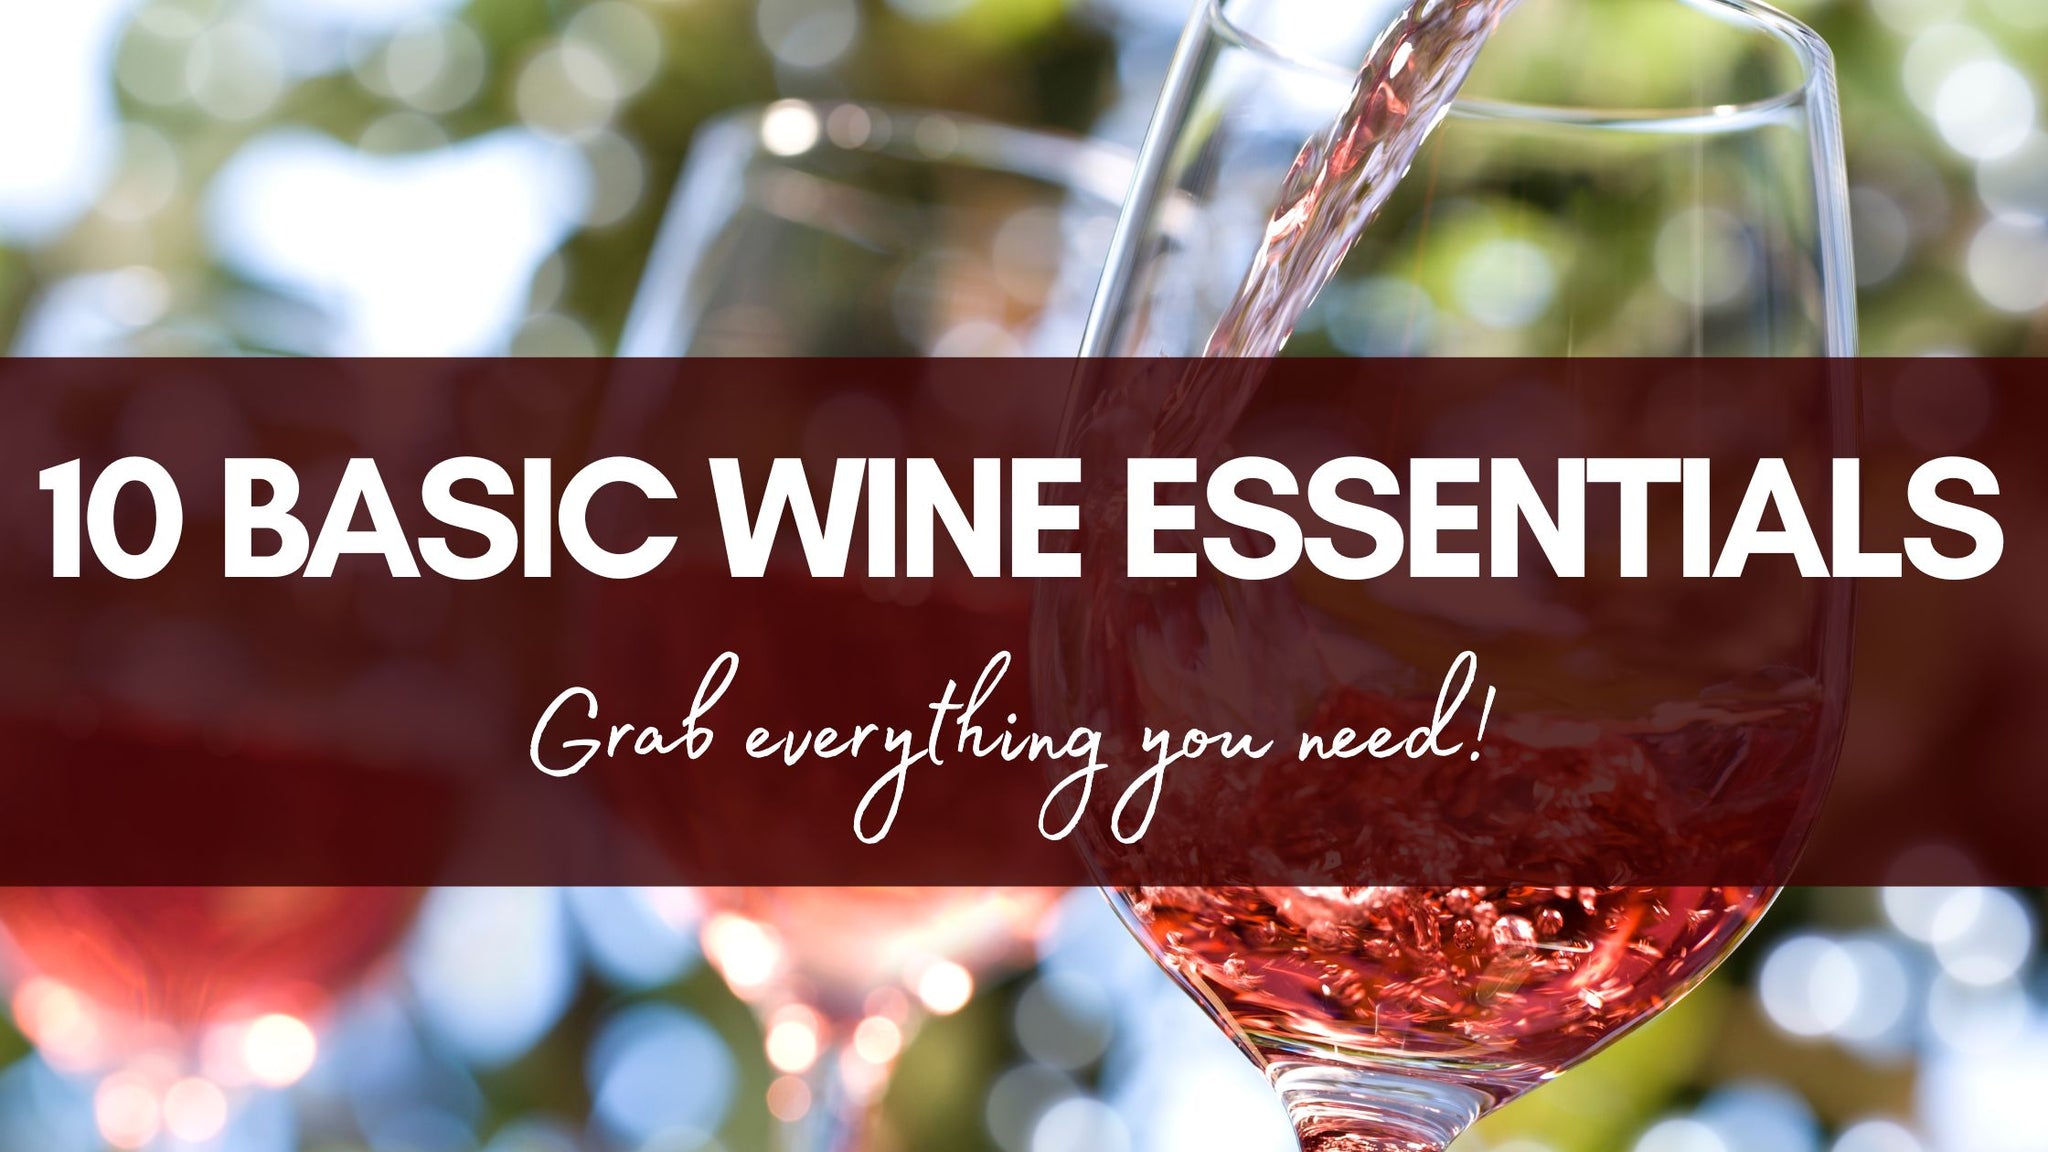 10 Basic Wine Essentials